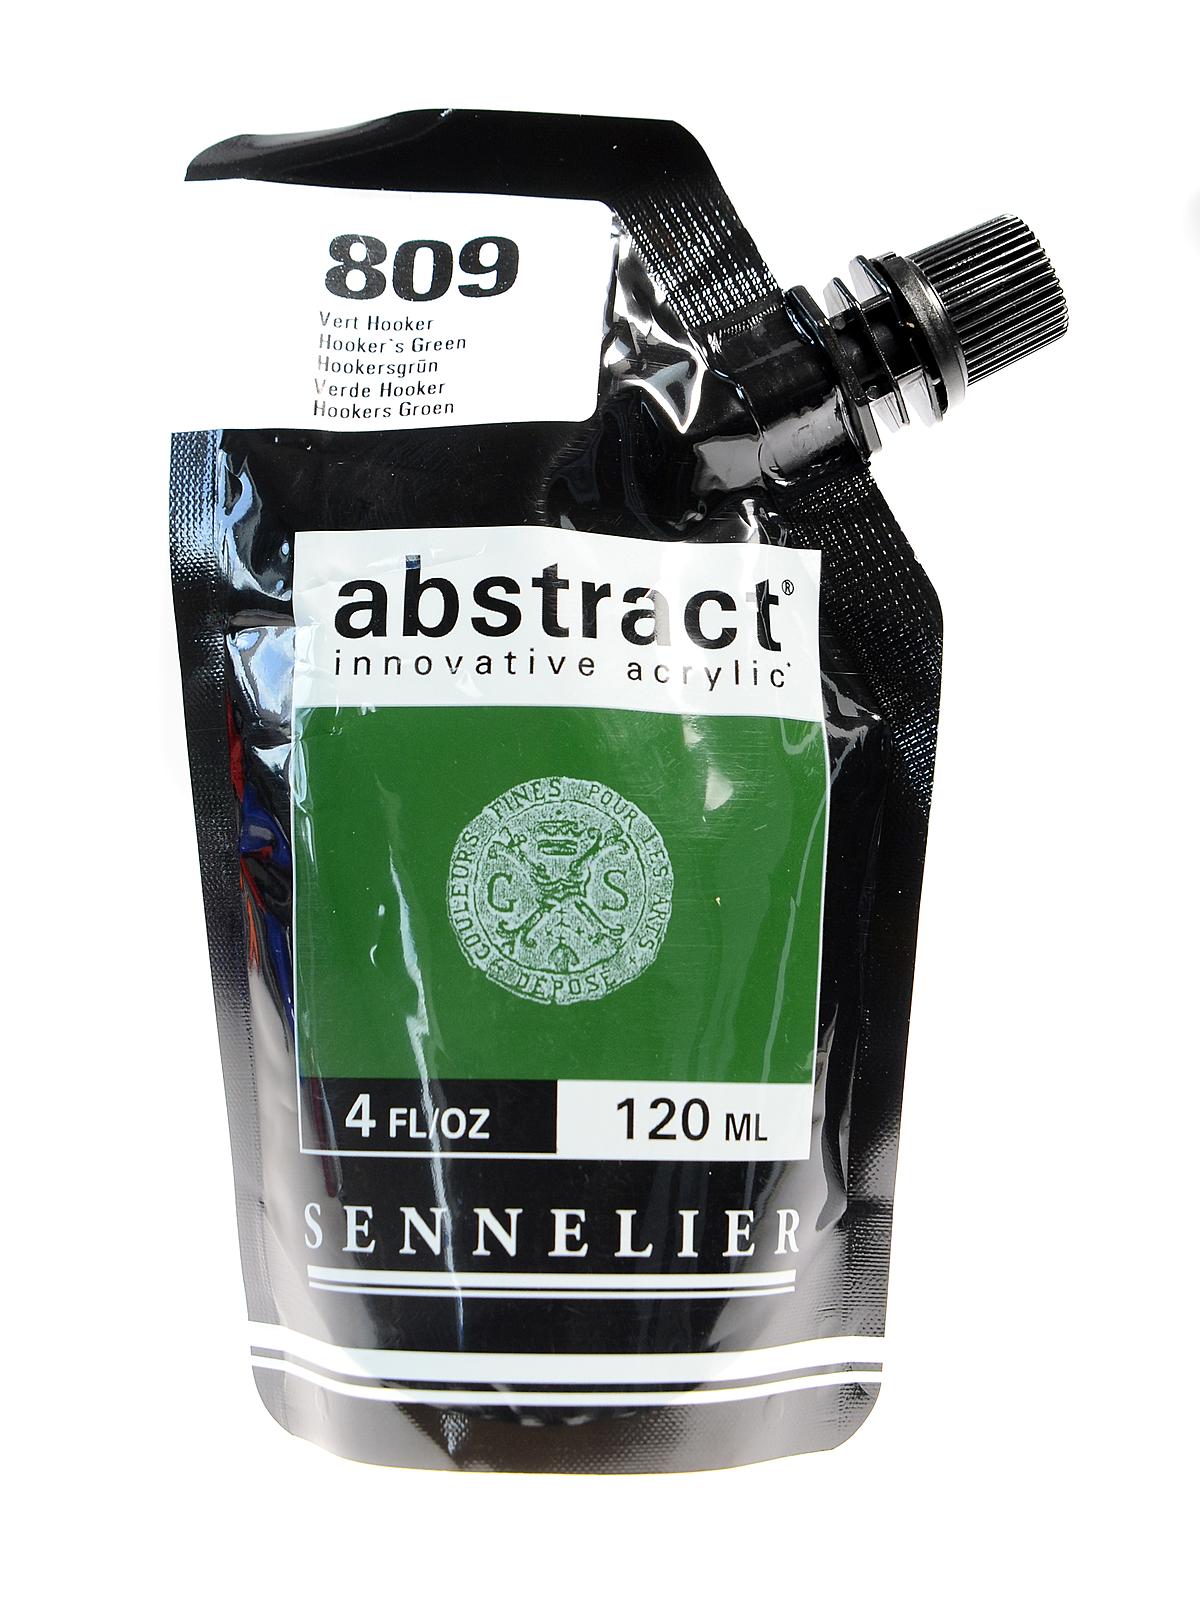 Sennelier Abstract Acrylic - Deep Magenta, 120 ml pouch